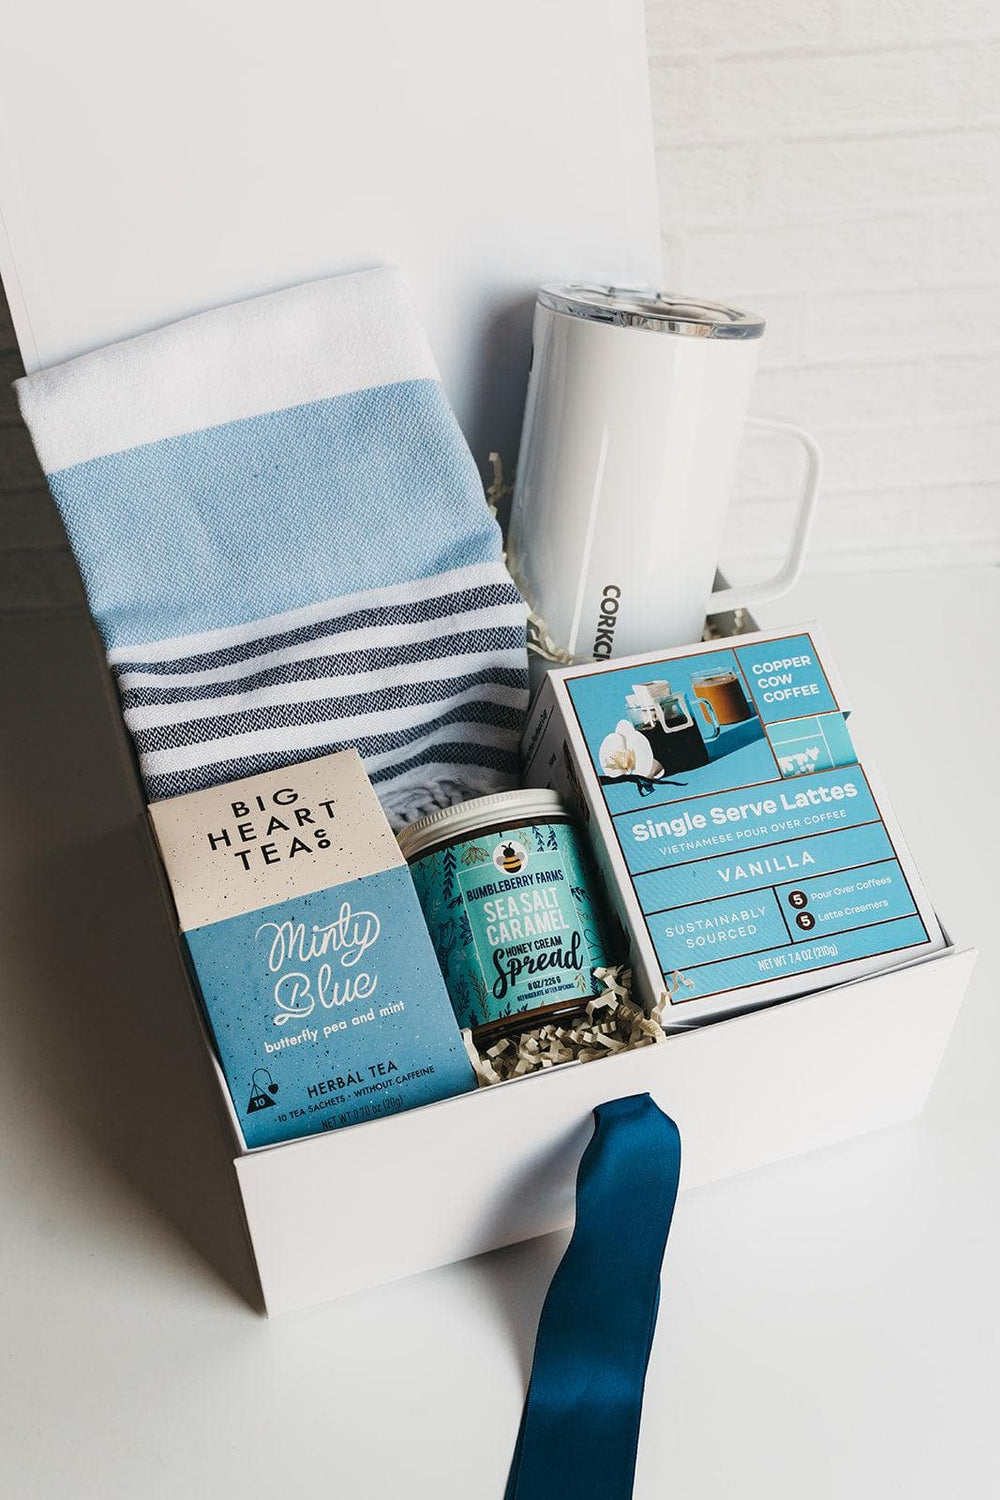 Tea Time Treats Gift Box - Giften Market